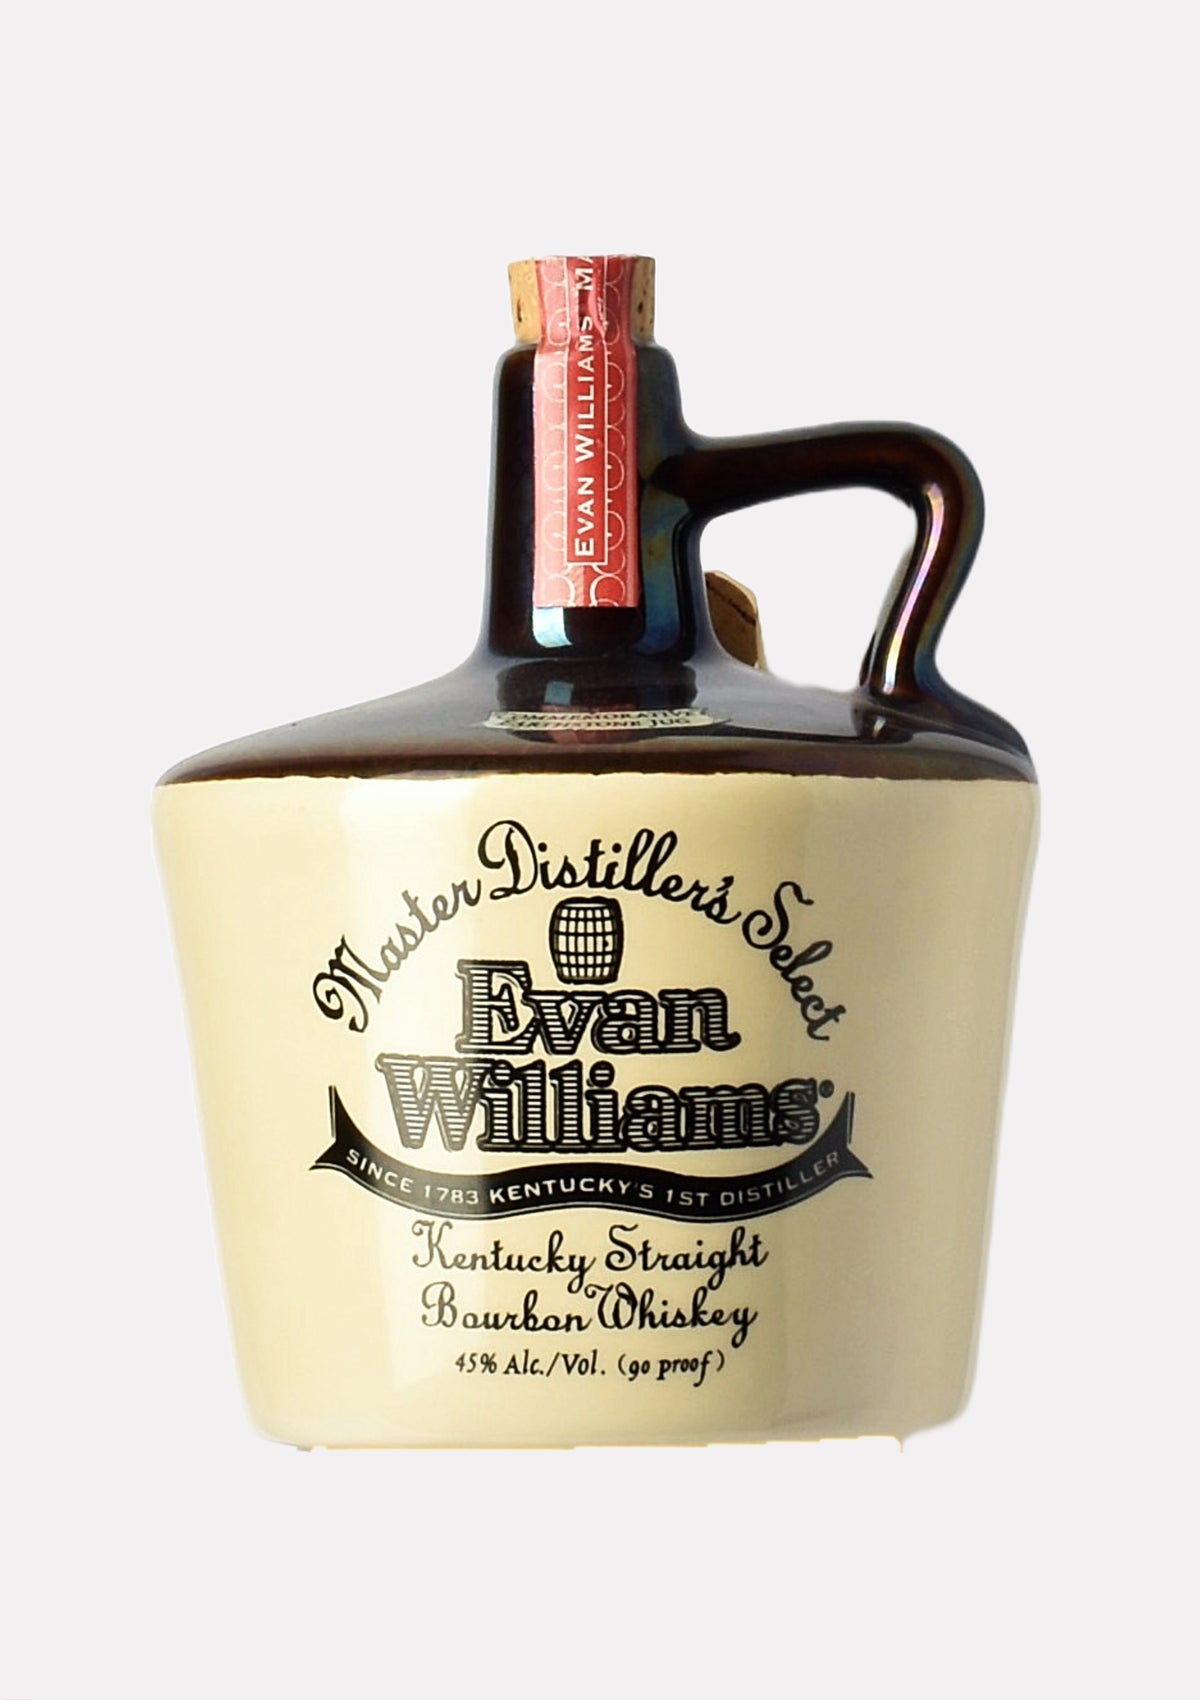 Evan Williams Master Distiller`s Select Kentucky Straight Bourbon Whiskey